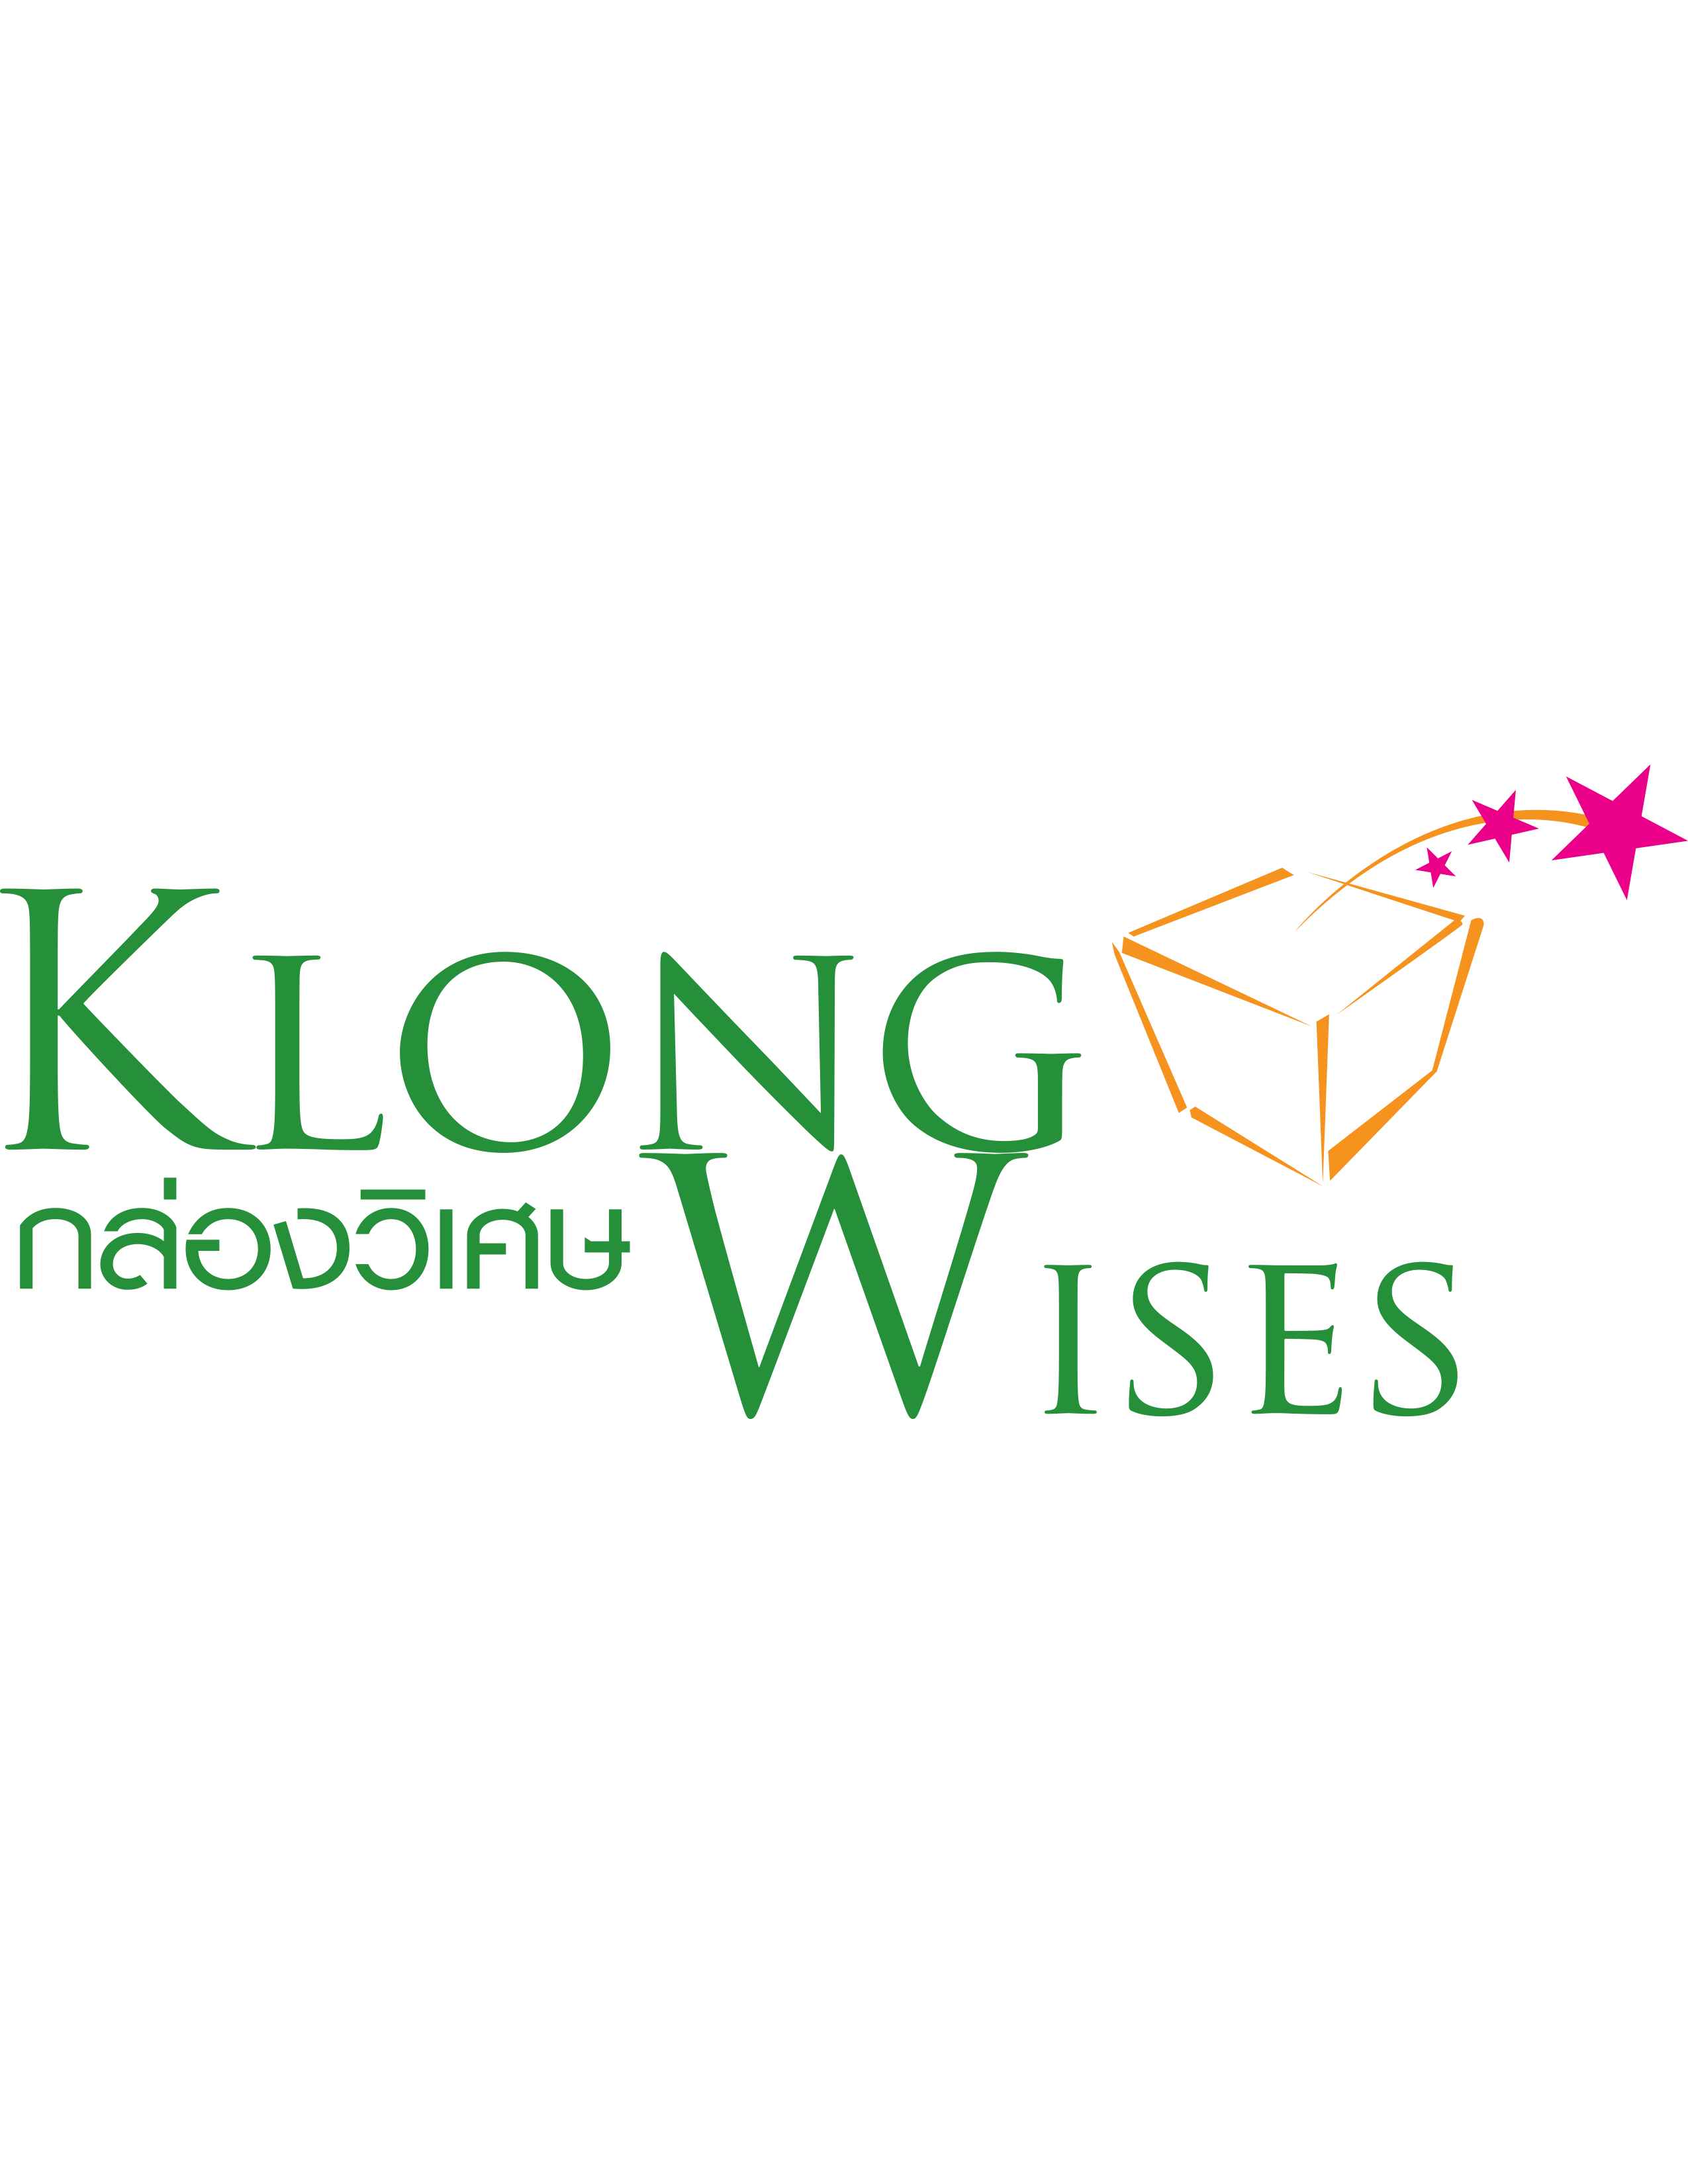 Klongwises (Social Enterprise) - image